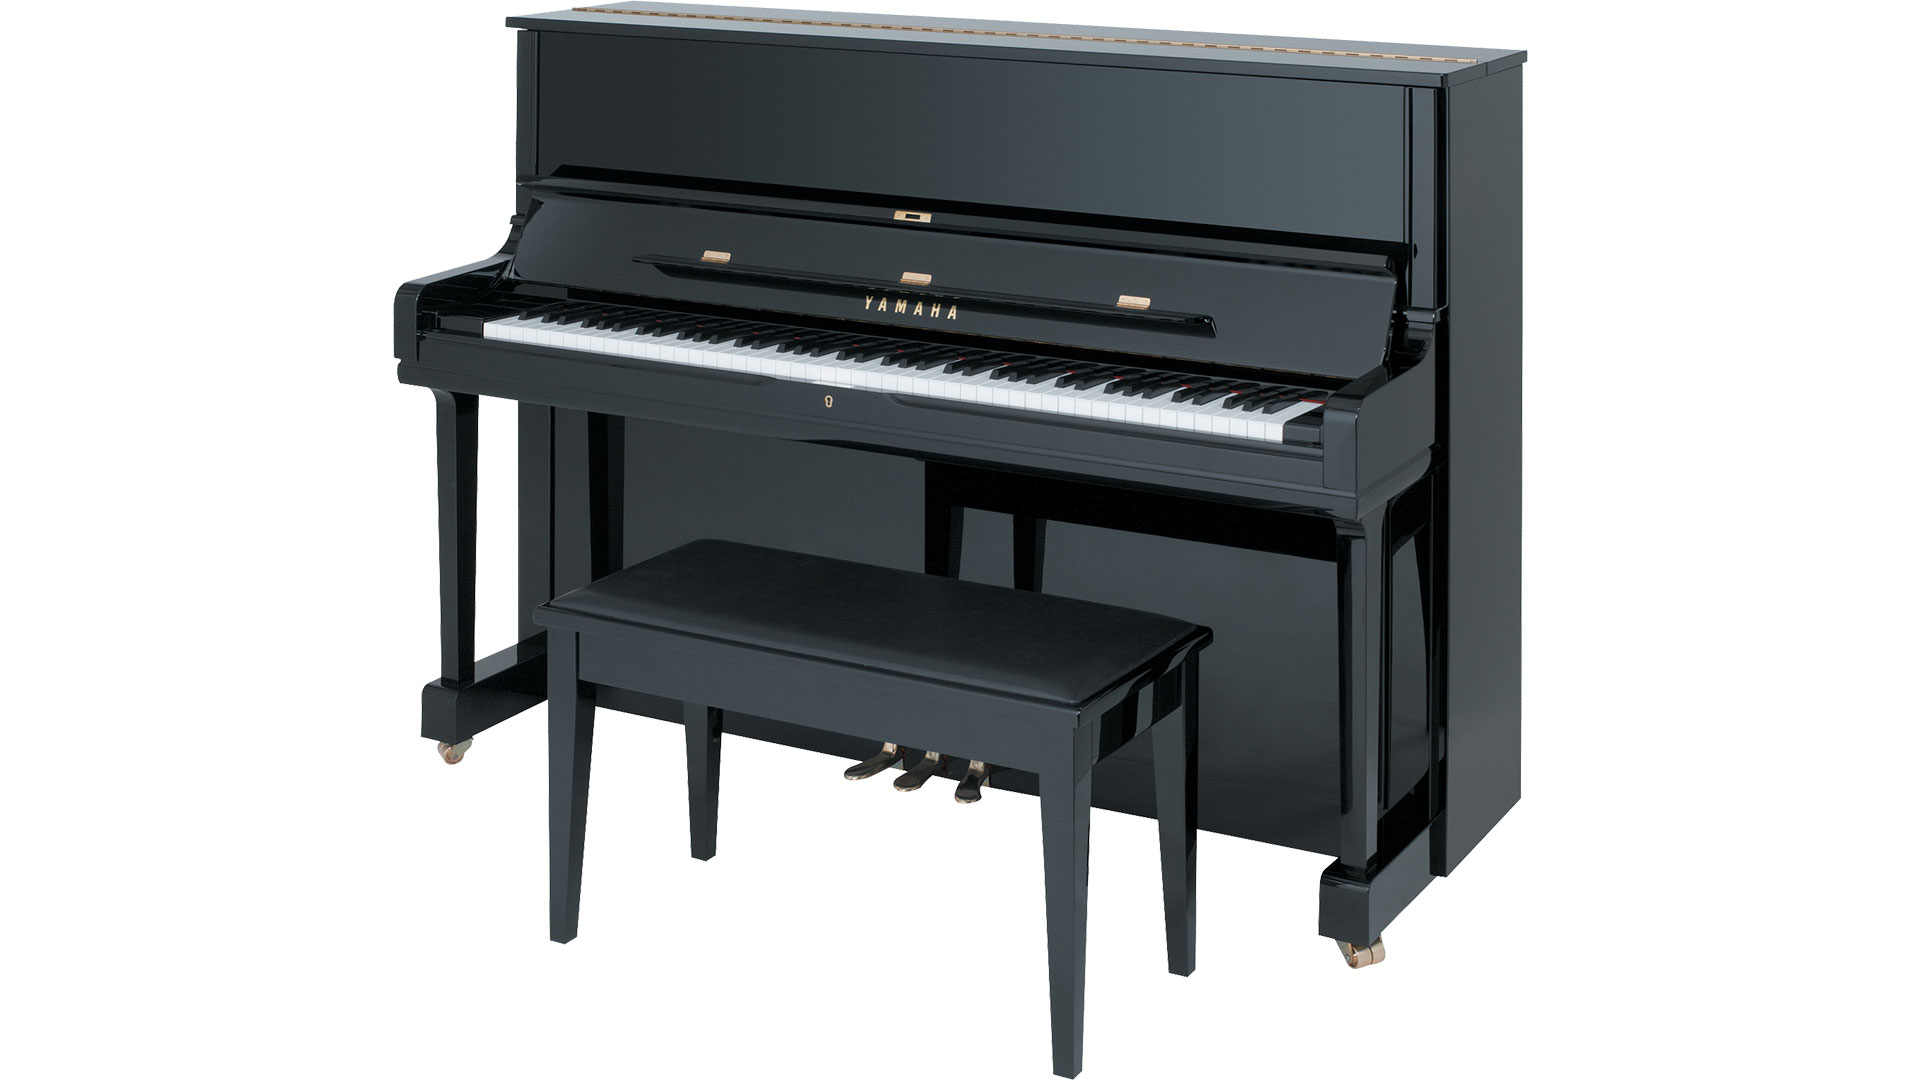 Yamaha piano Model yus1